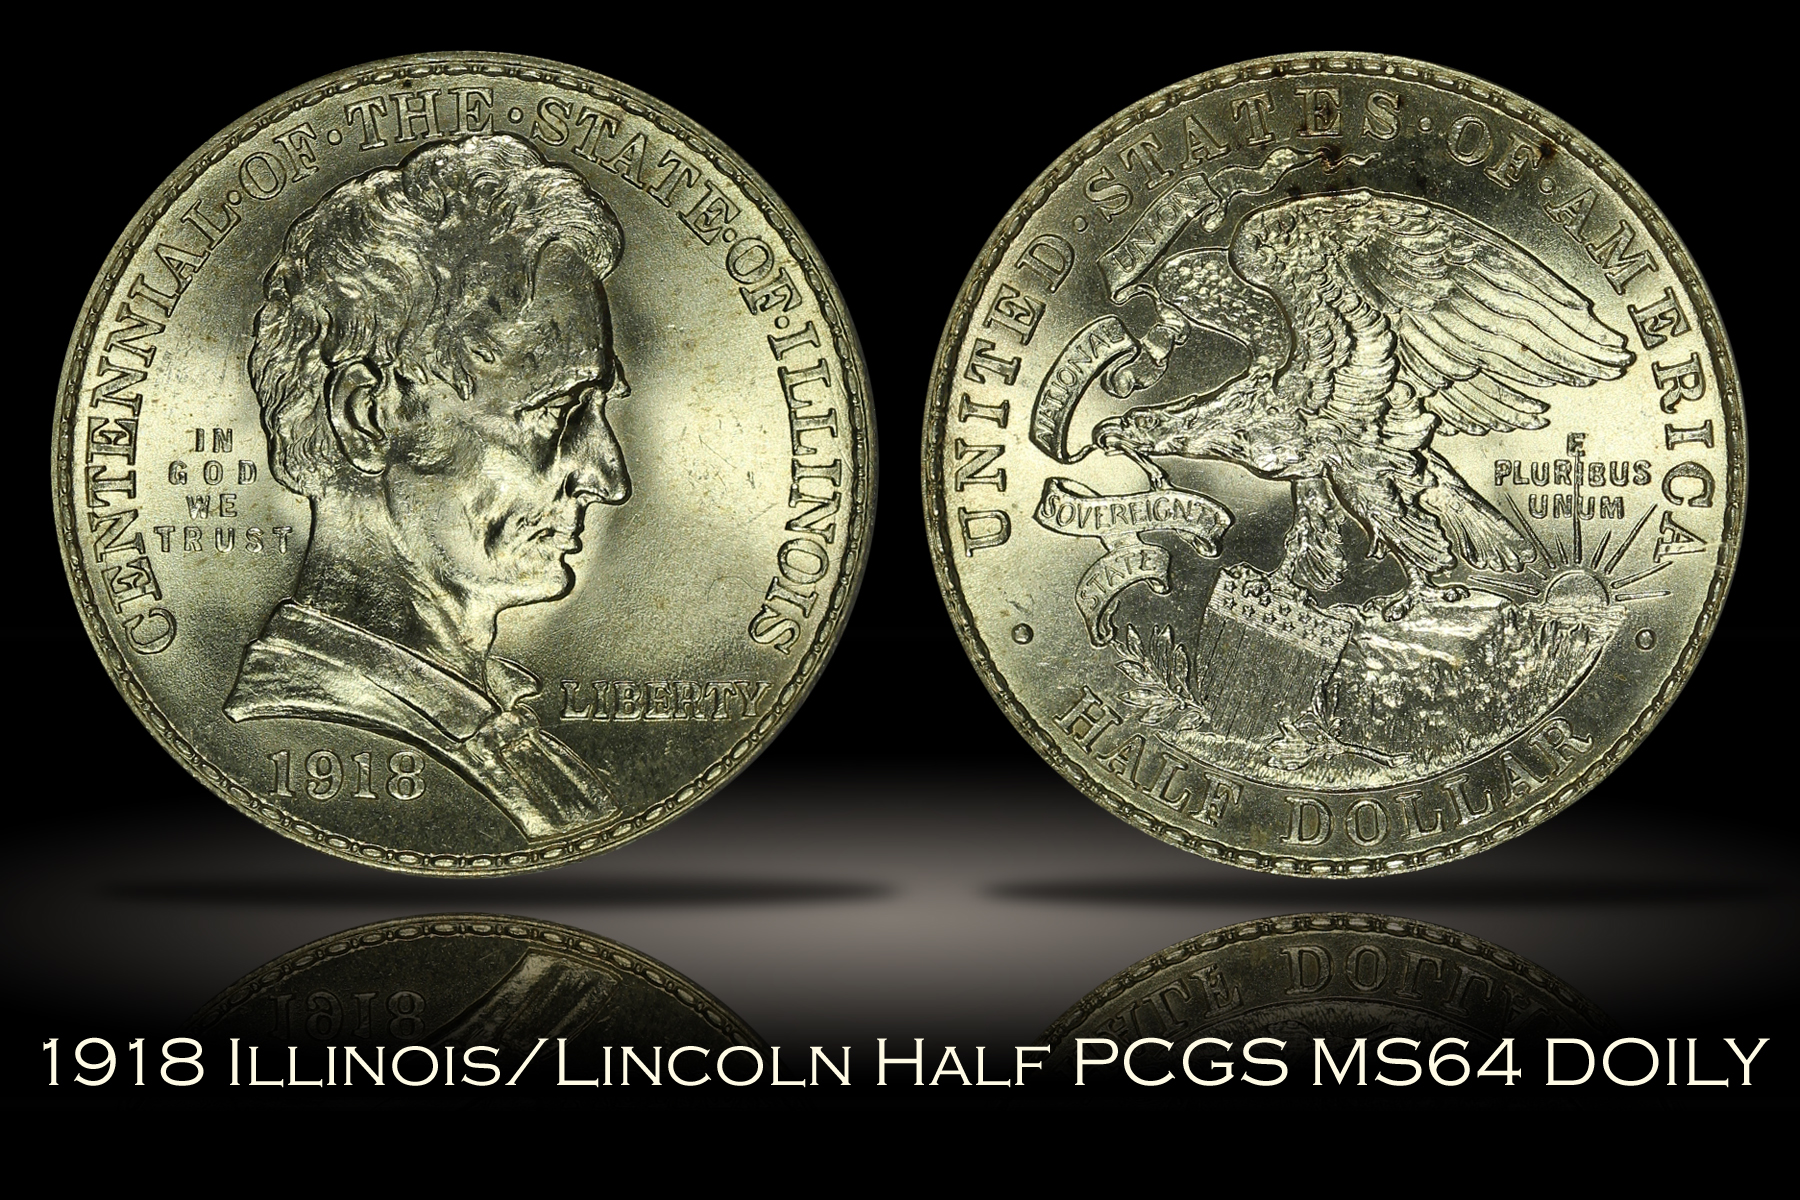 1918 Illinois/Lincoln Half PCGS MS65 DOILY